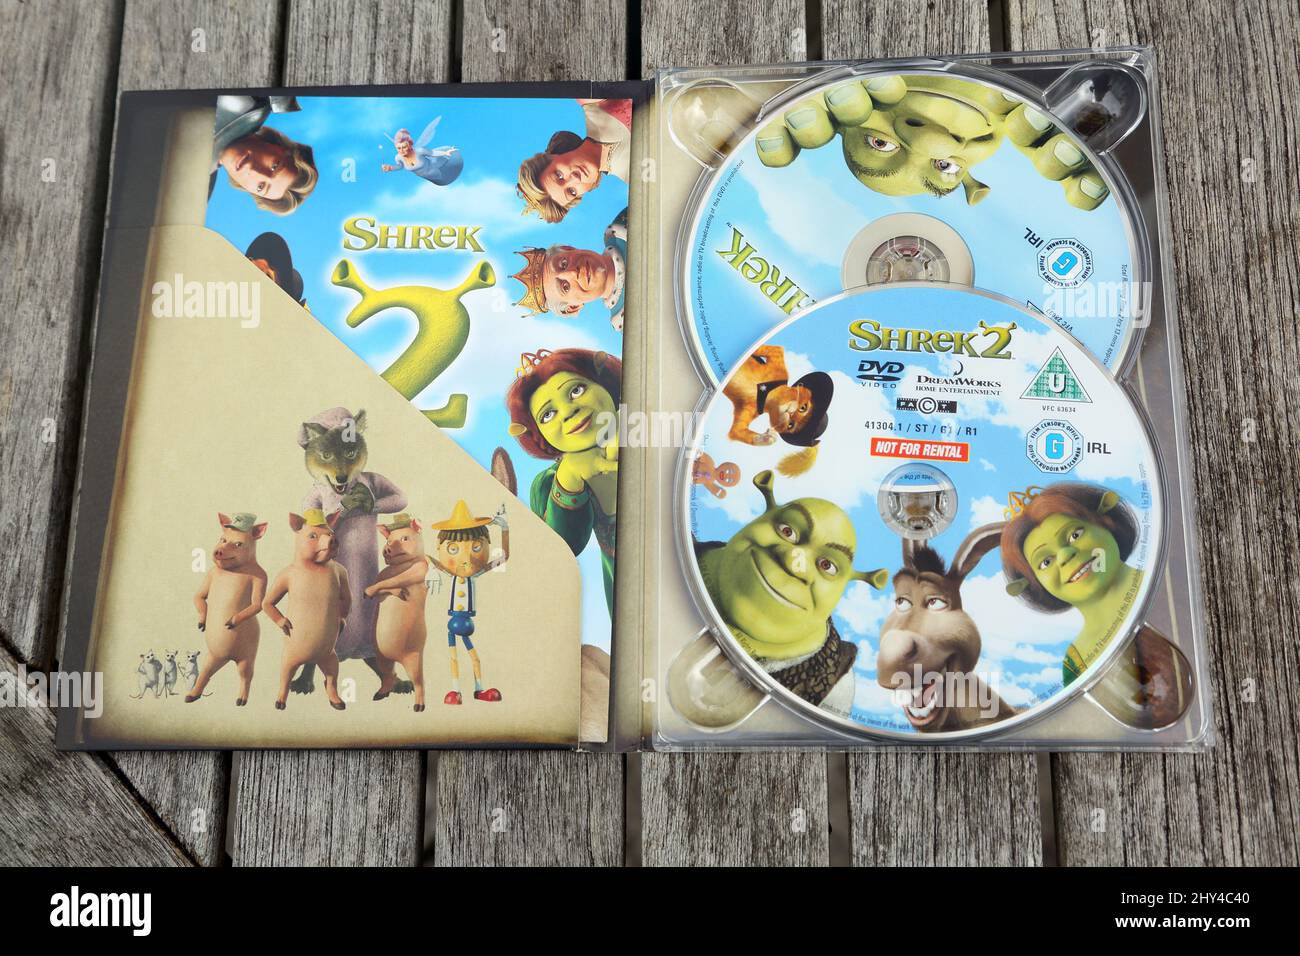 Shrek film shrek hi-res stock photography and images - Alamy